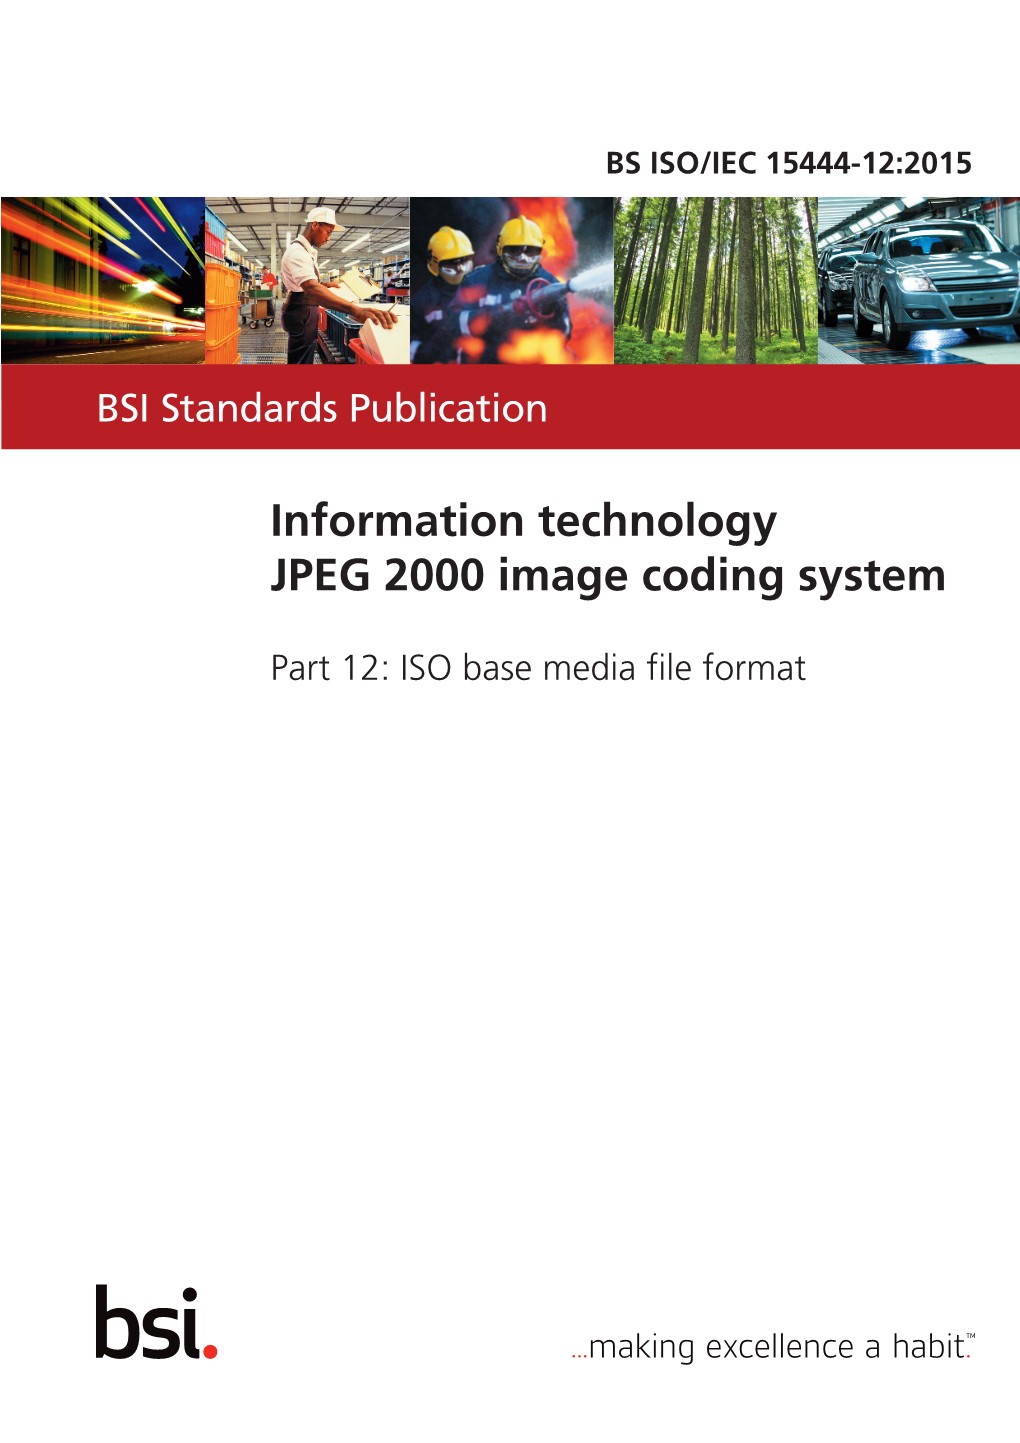 Information Technology — JPEG 2000 Image Coding System